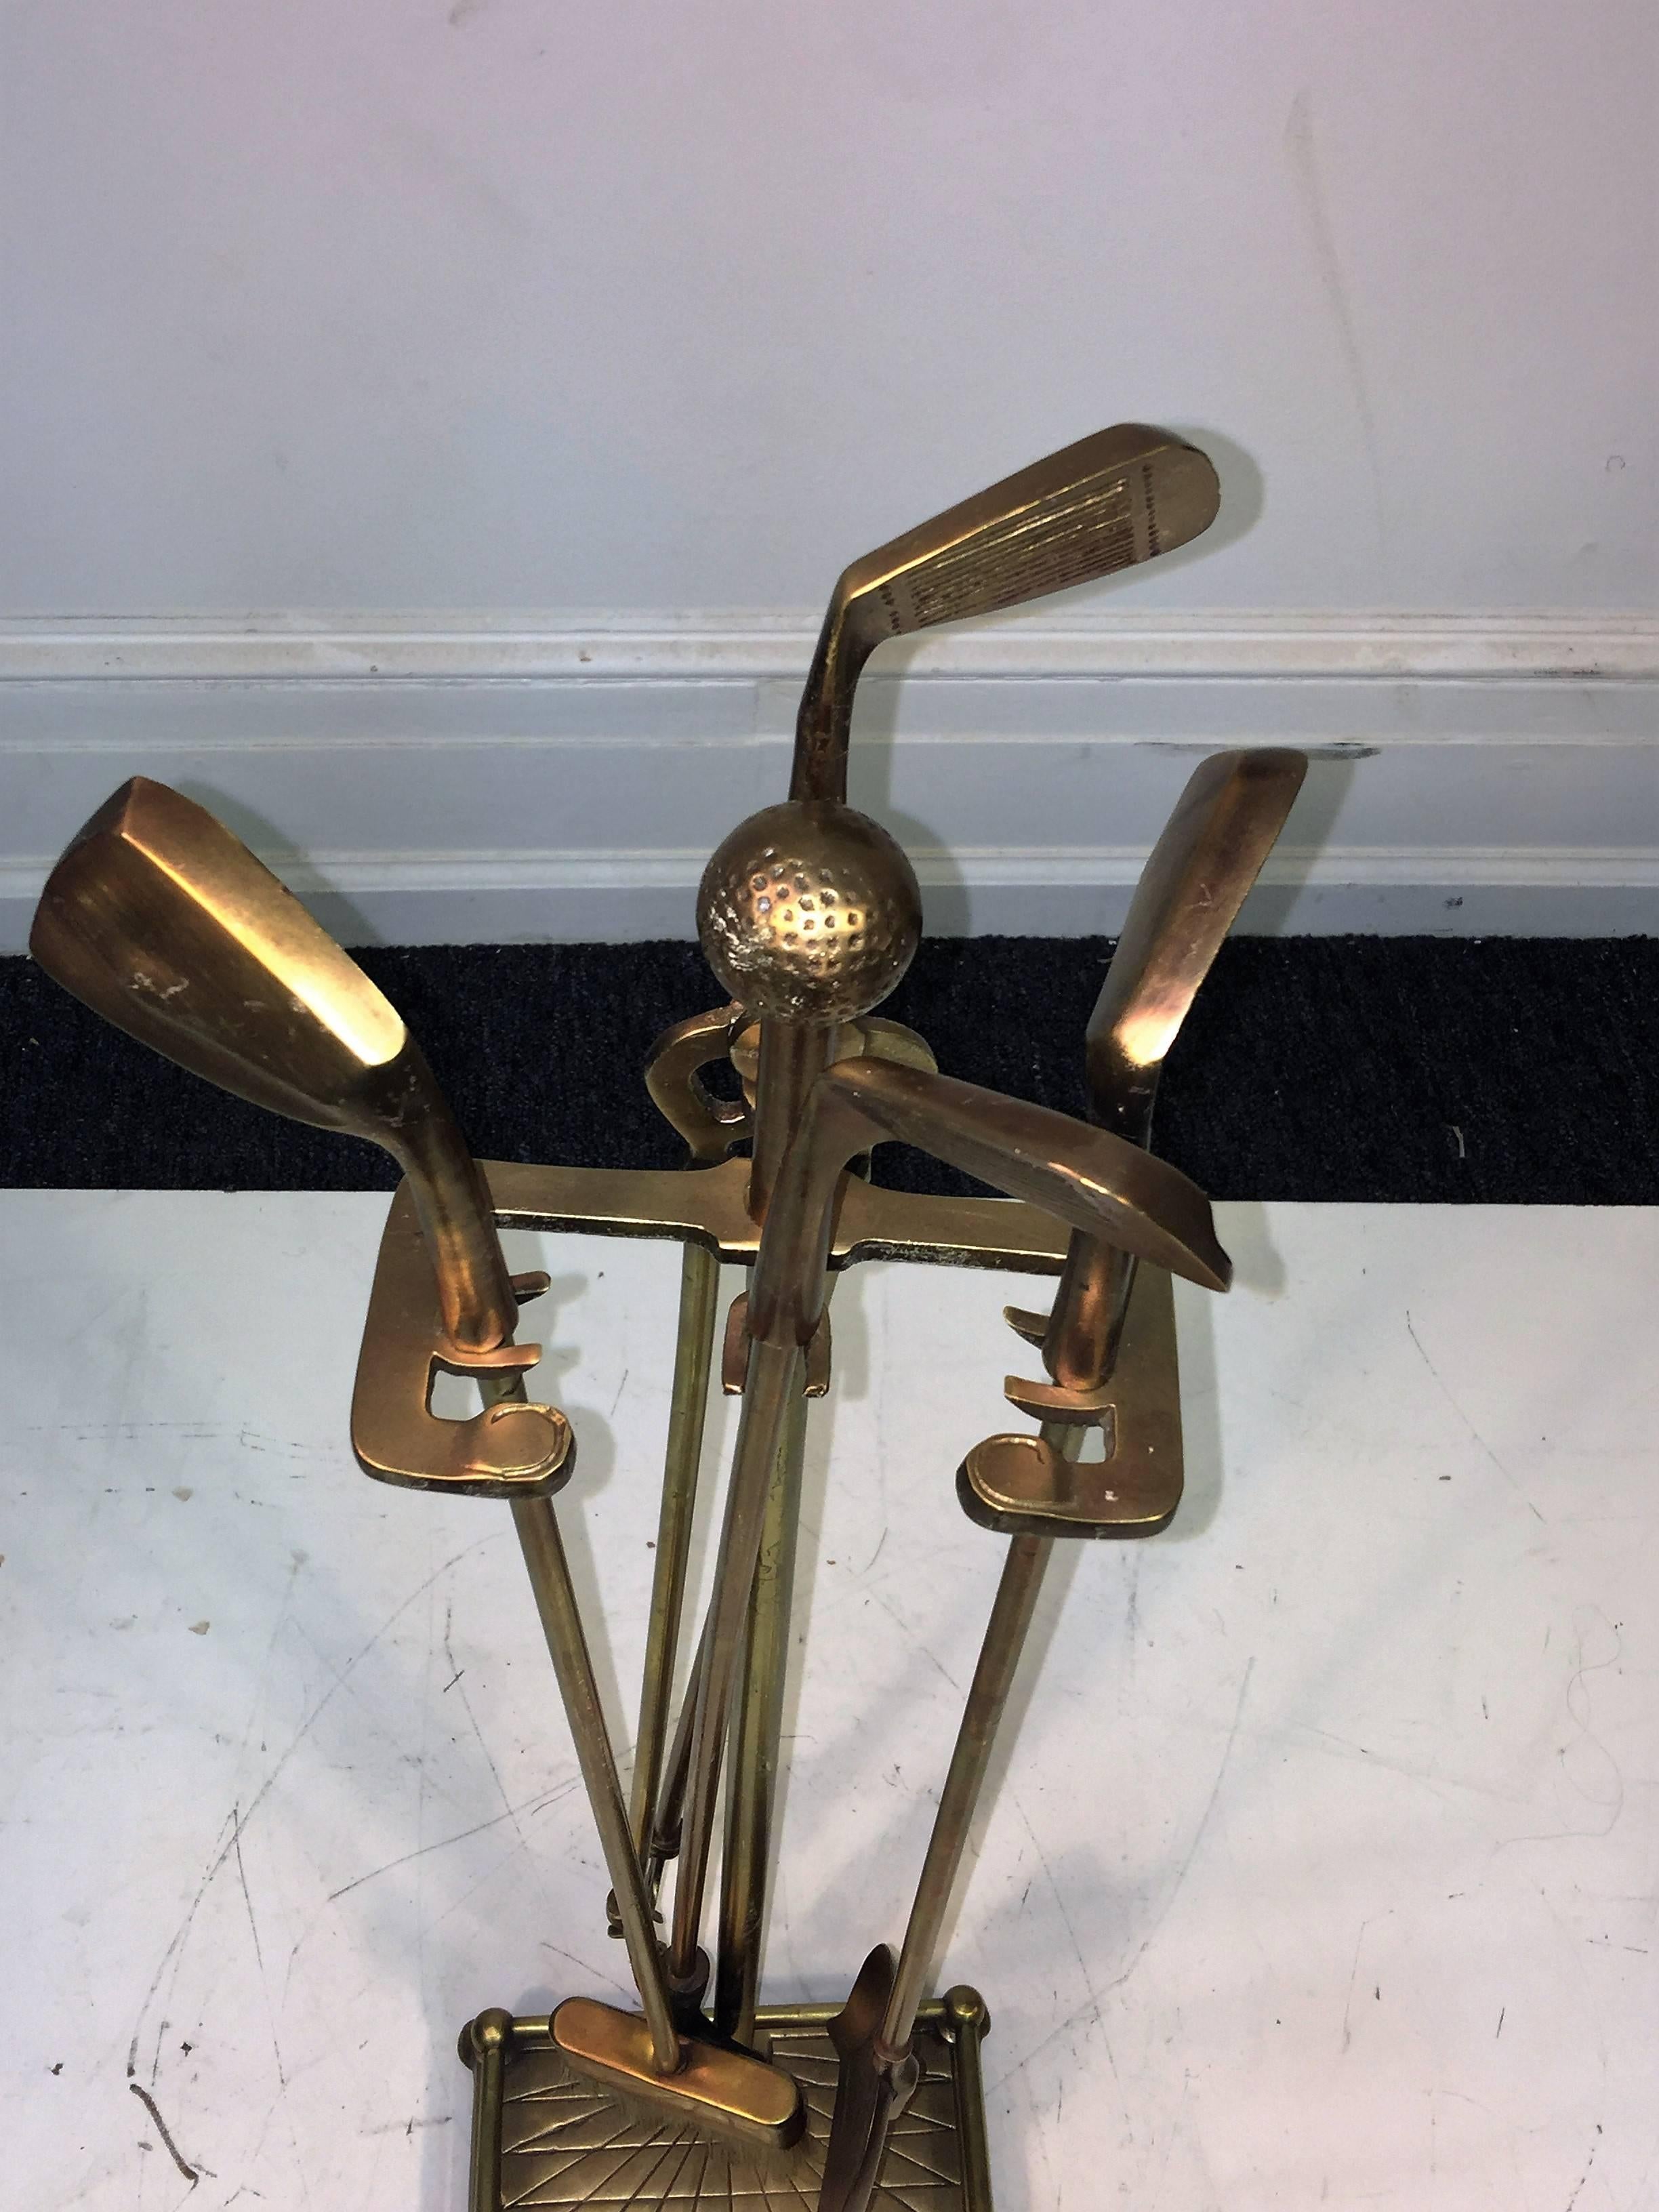 Bronzed metal golf handles fire tools-poker, tongs, shovel and brush
31